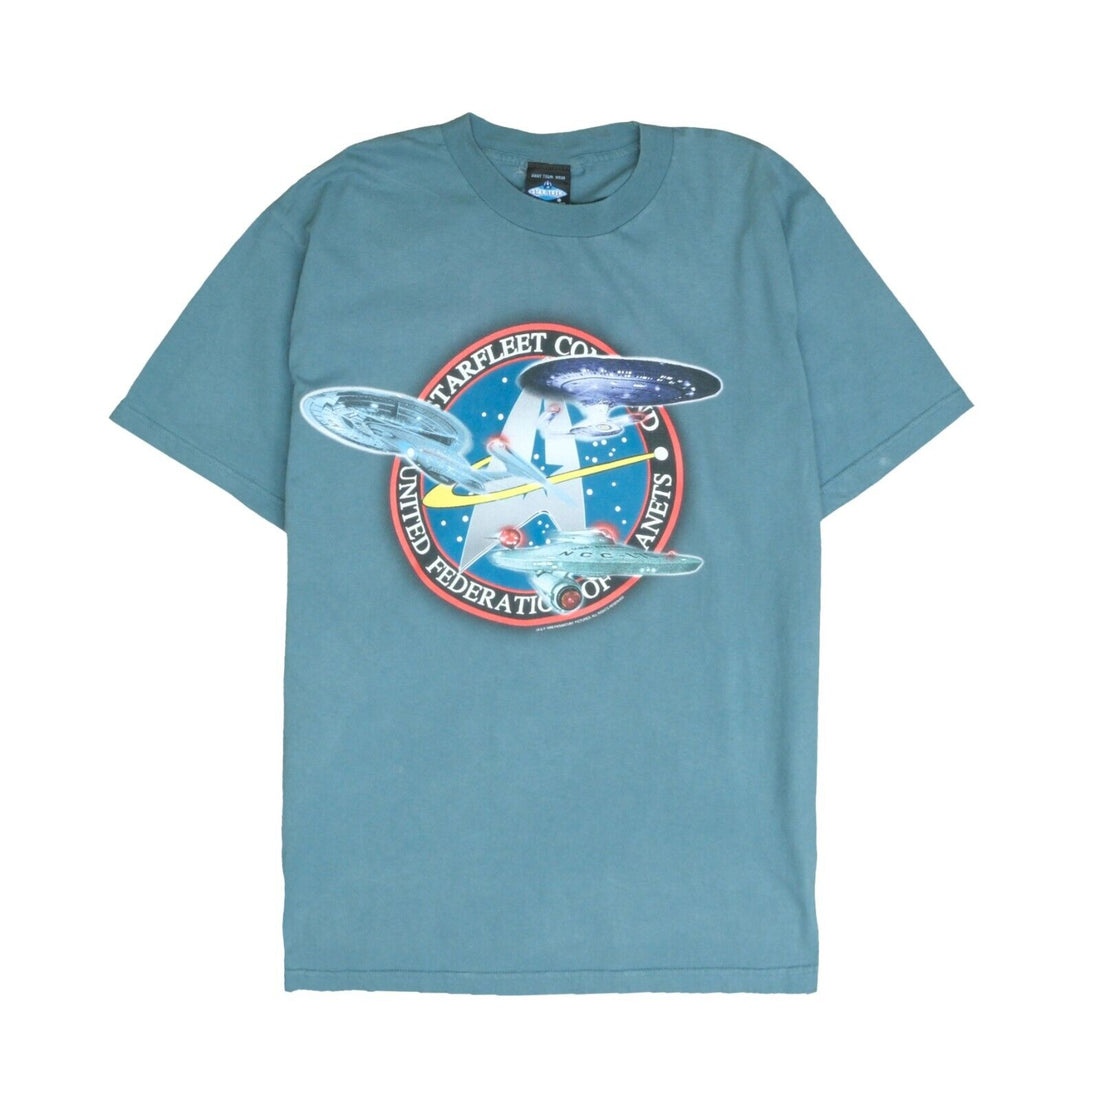 Vintage Star Trek USS Enterprise Starfleet T-Shirt Size Large Blue 1998 90s